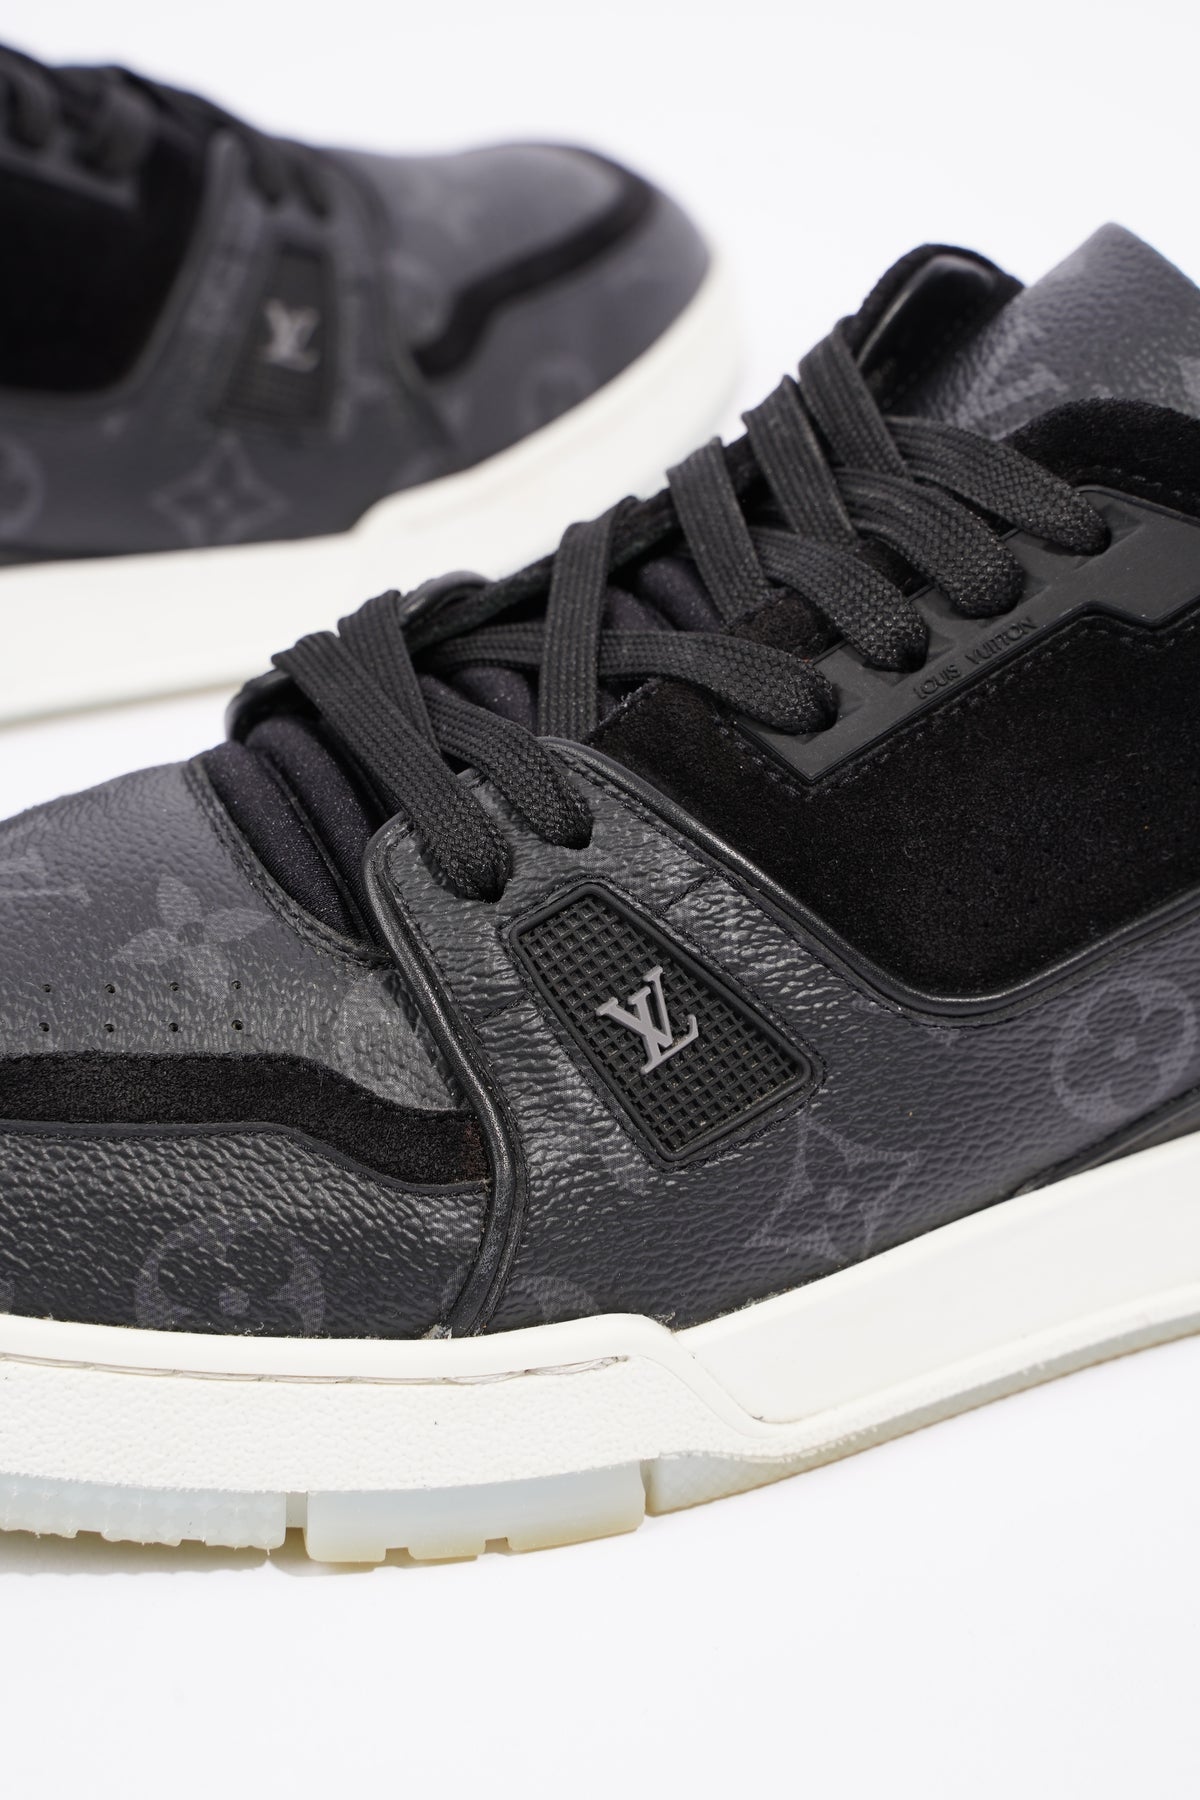 Louis Vuitton Men's LV Trainer Sneakers Monogram Eclipse with Suede Black  2301361